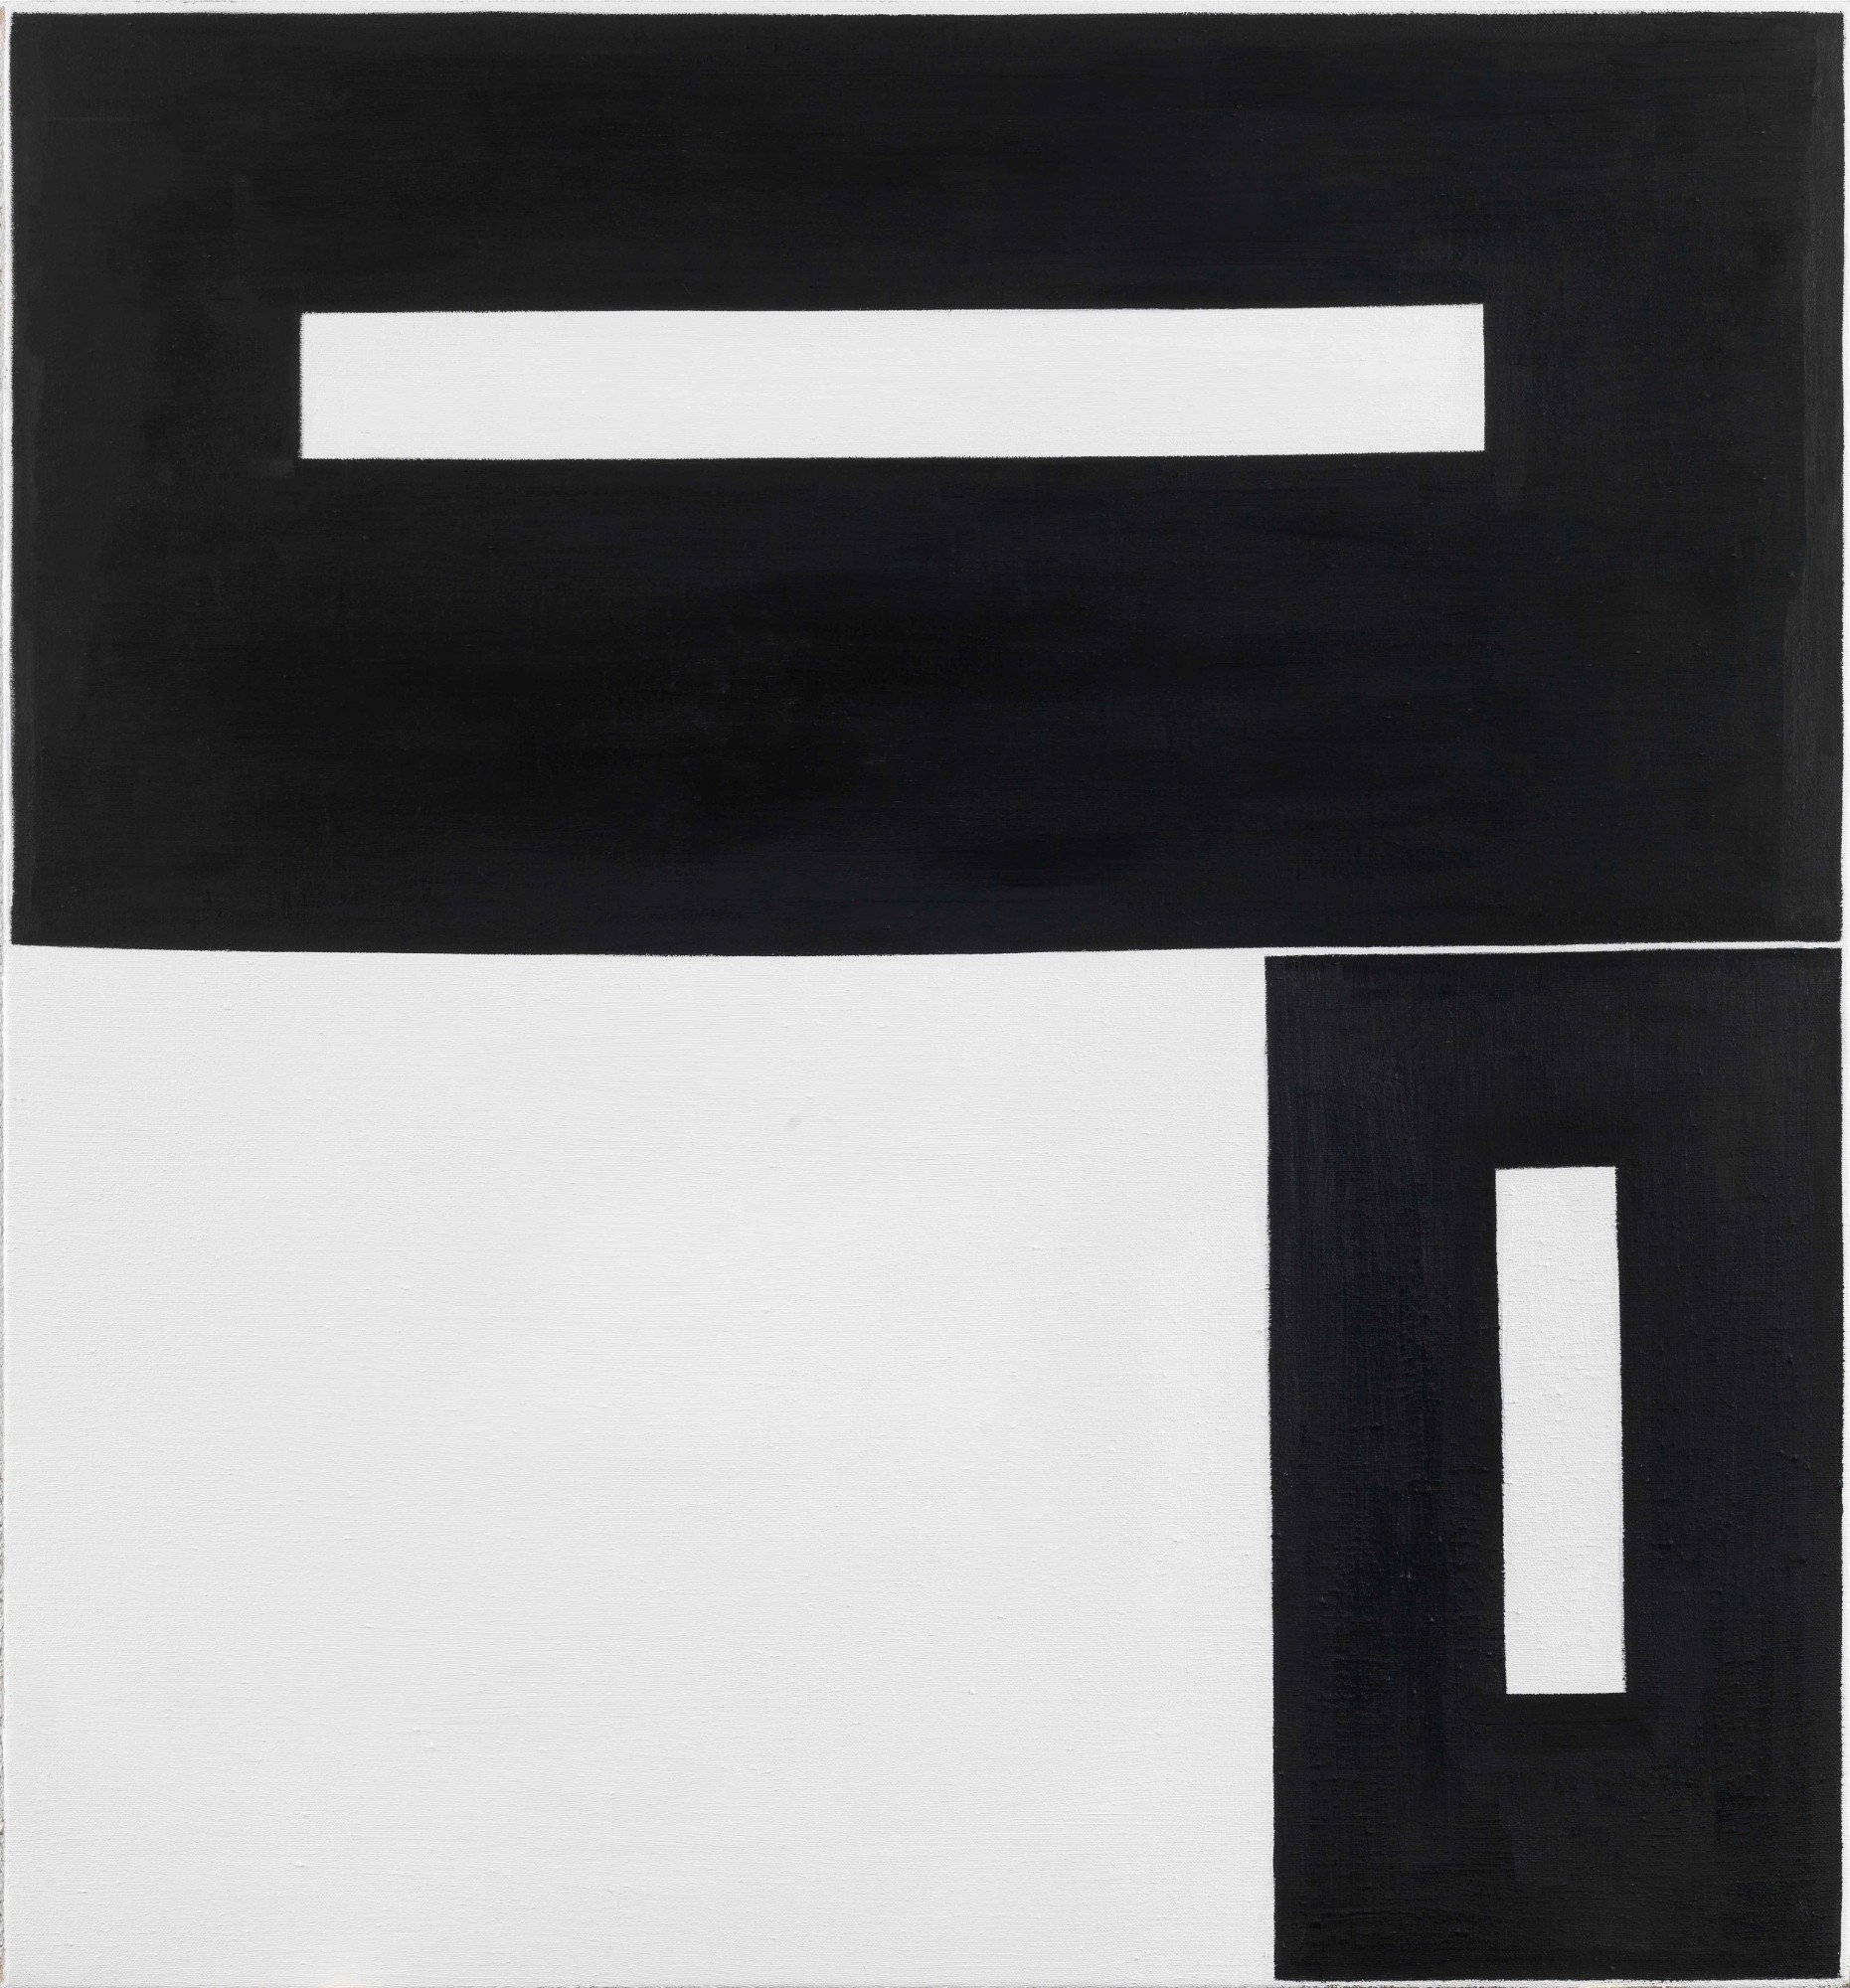 André Butzer, untitled, 2012, oil on canvas, 109 x 101 cm